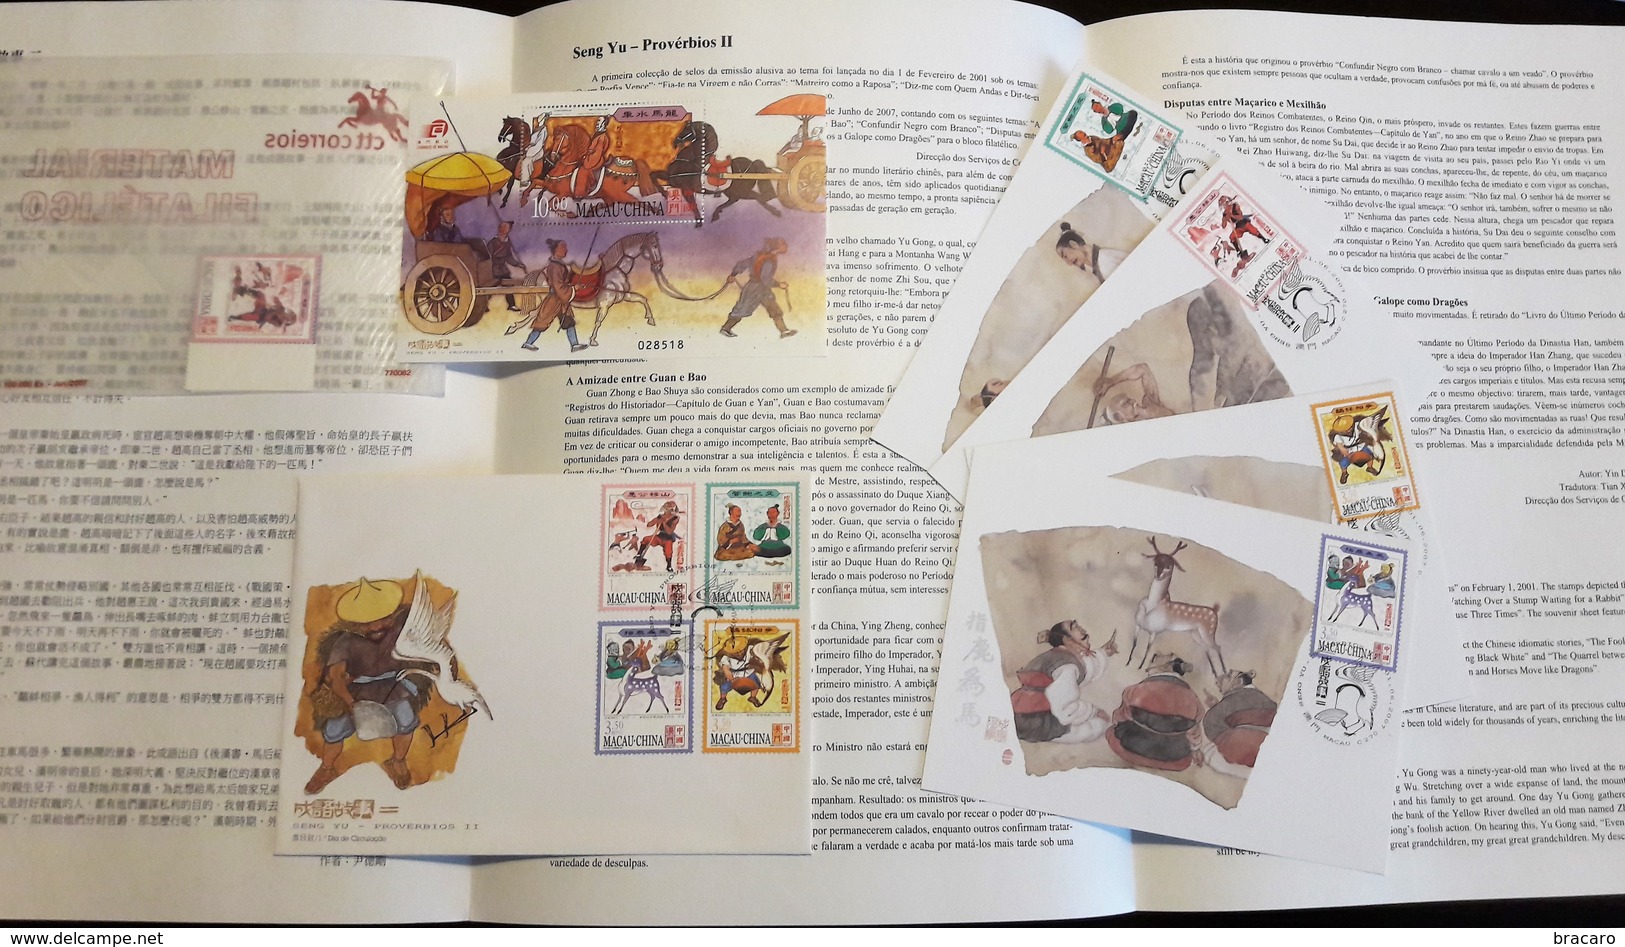 MACAU / MACAO (CHINA) - Seng Yu - Idioms II - 2007 - Stamps (full Set) MNH + Block MNH + FDC + 4 Maximum Cards + Leaflet - Colecciones & Series